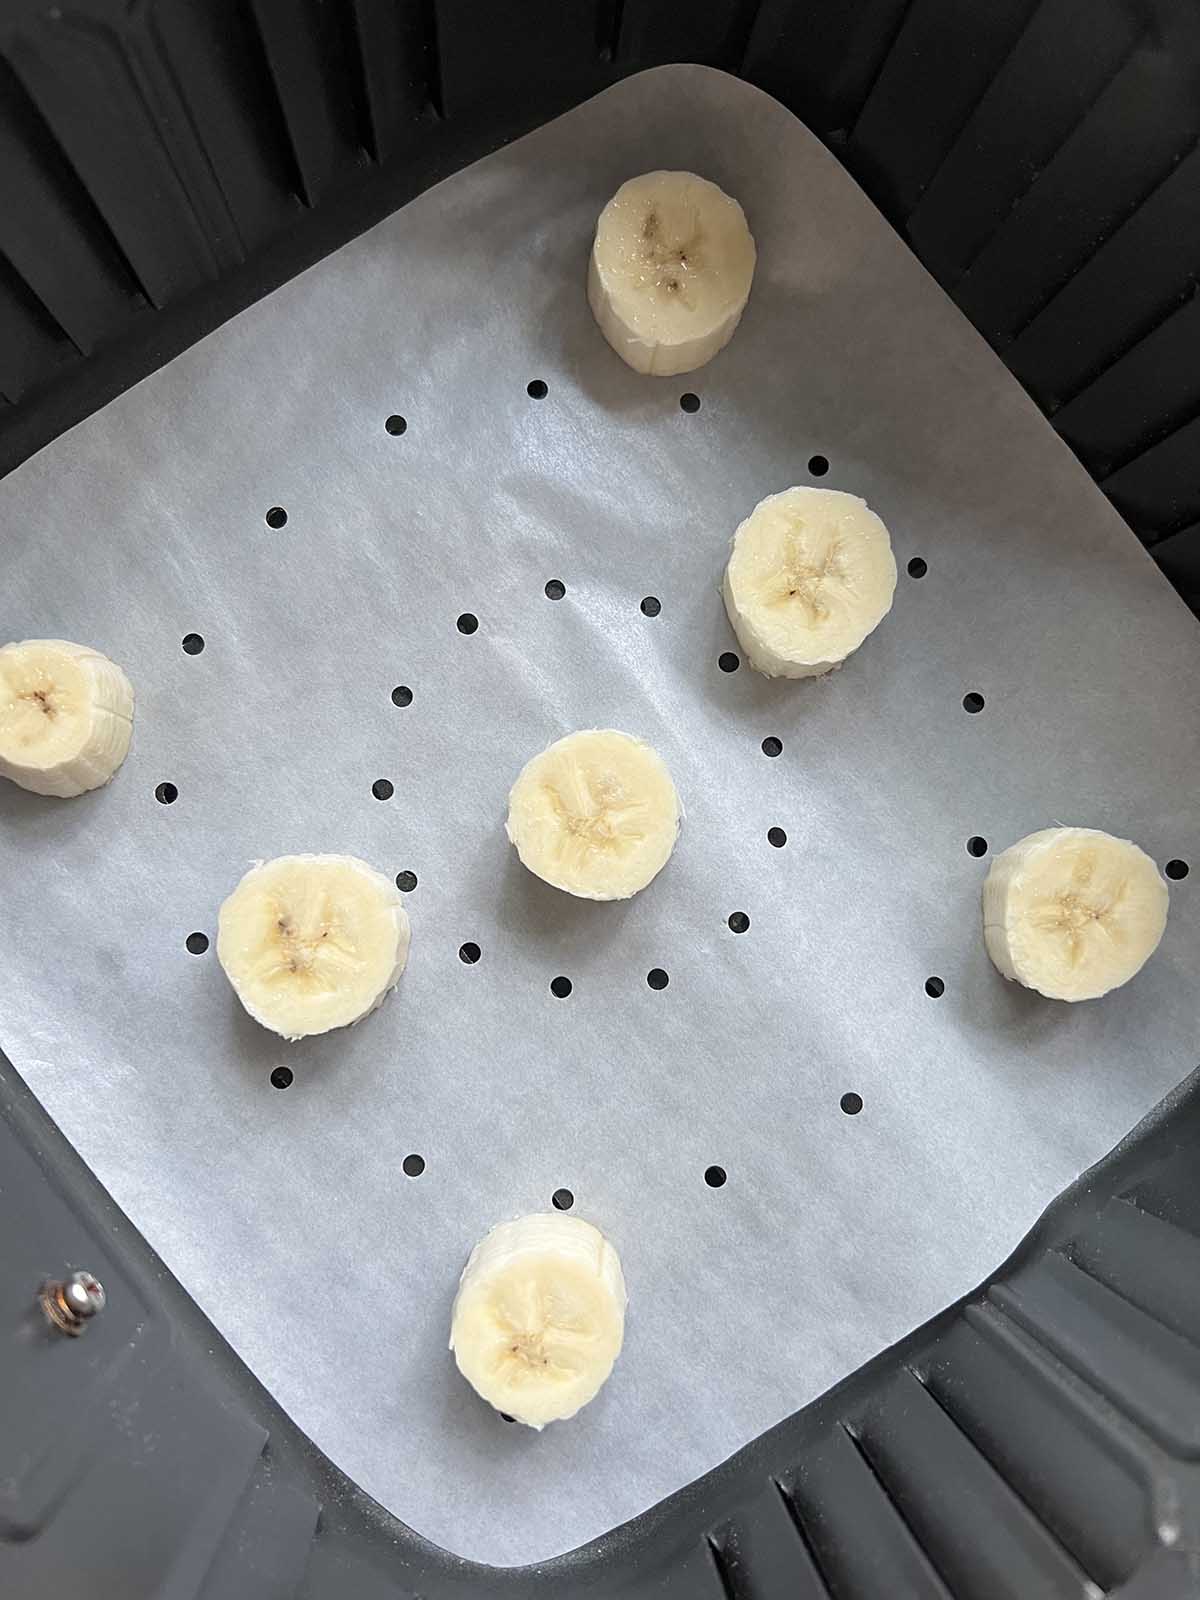 Banana slices in air fryer basket